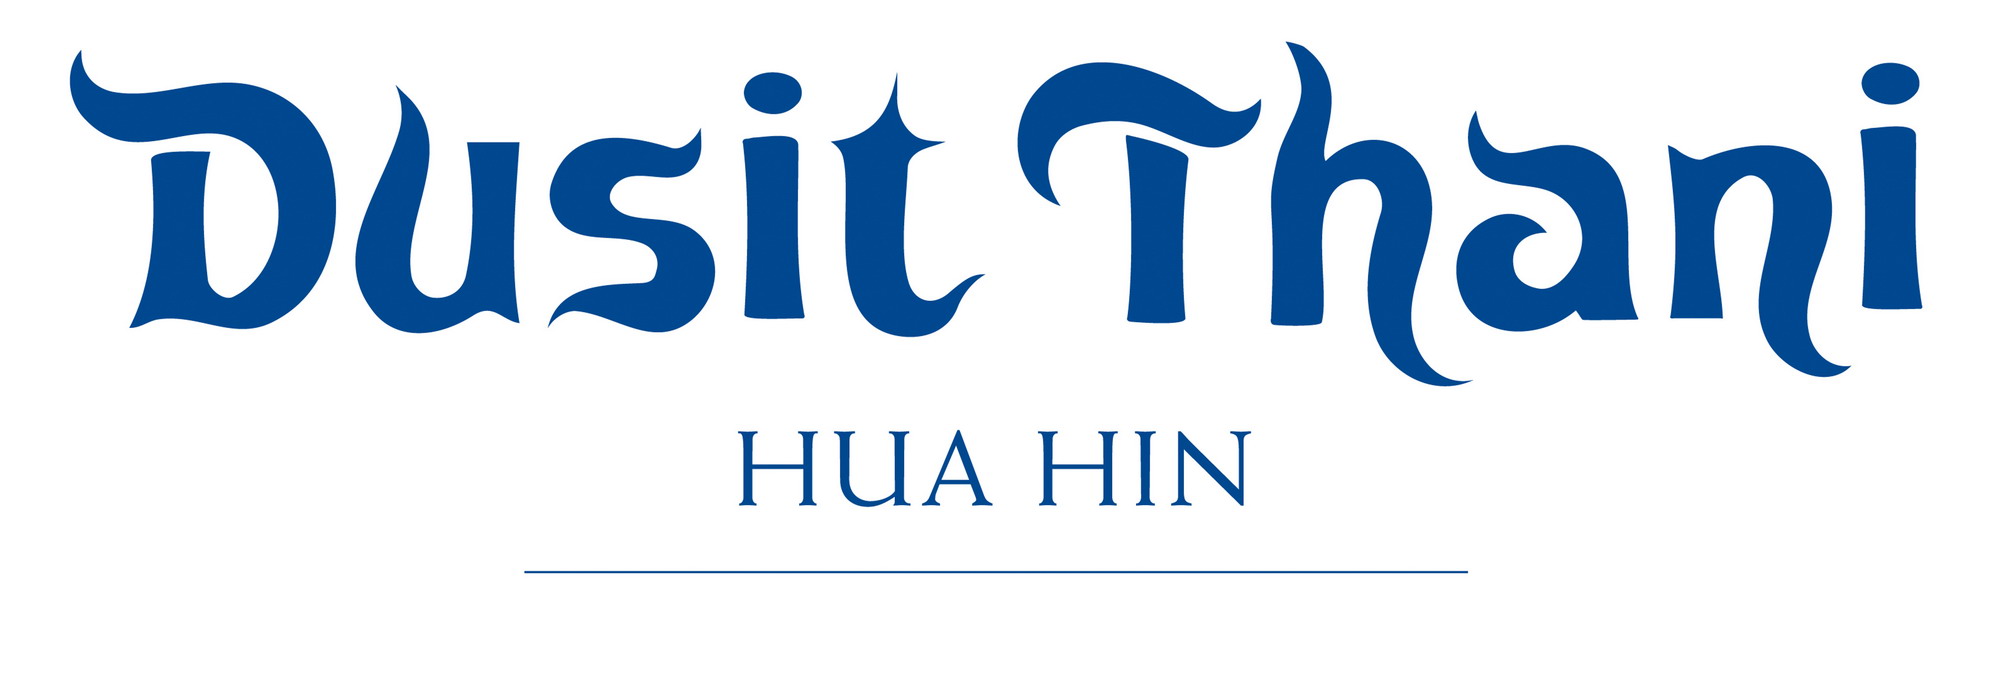 DUSIT THANI HUA HIN – SWISSTRAVELMANAGER